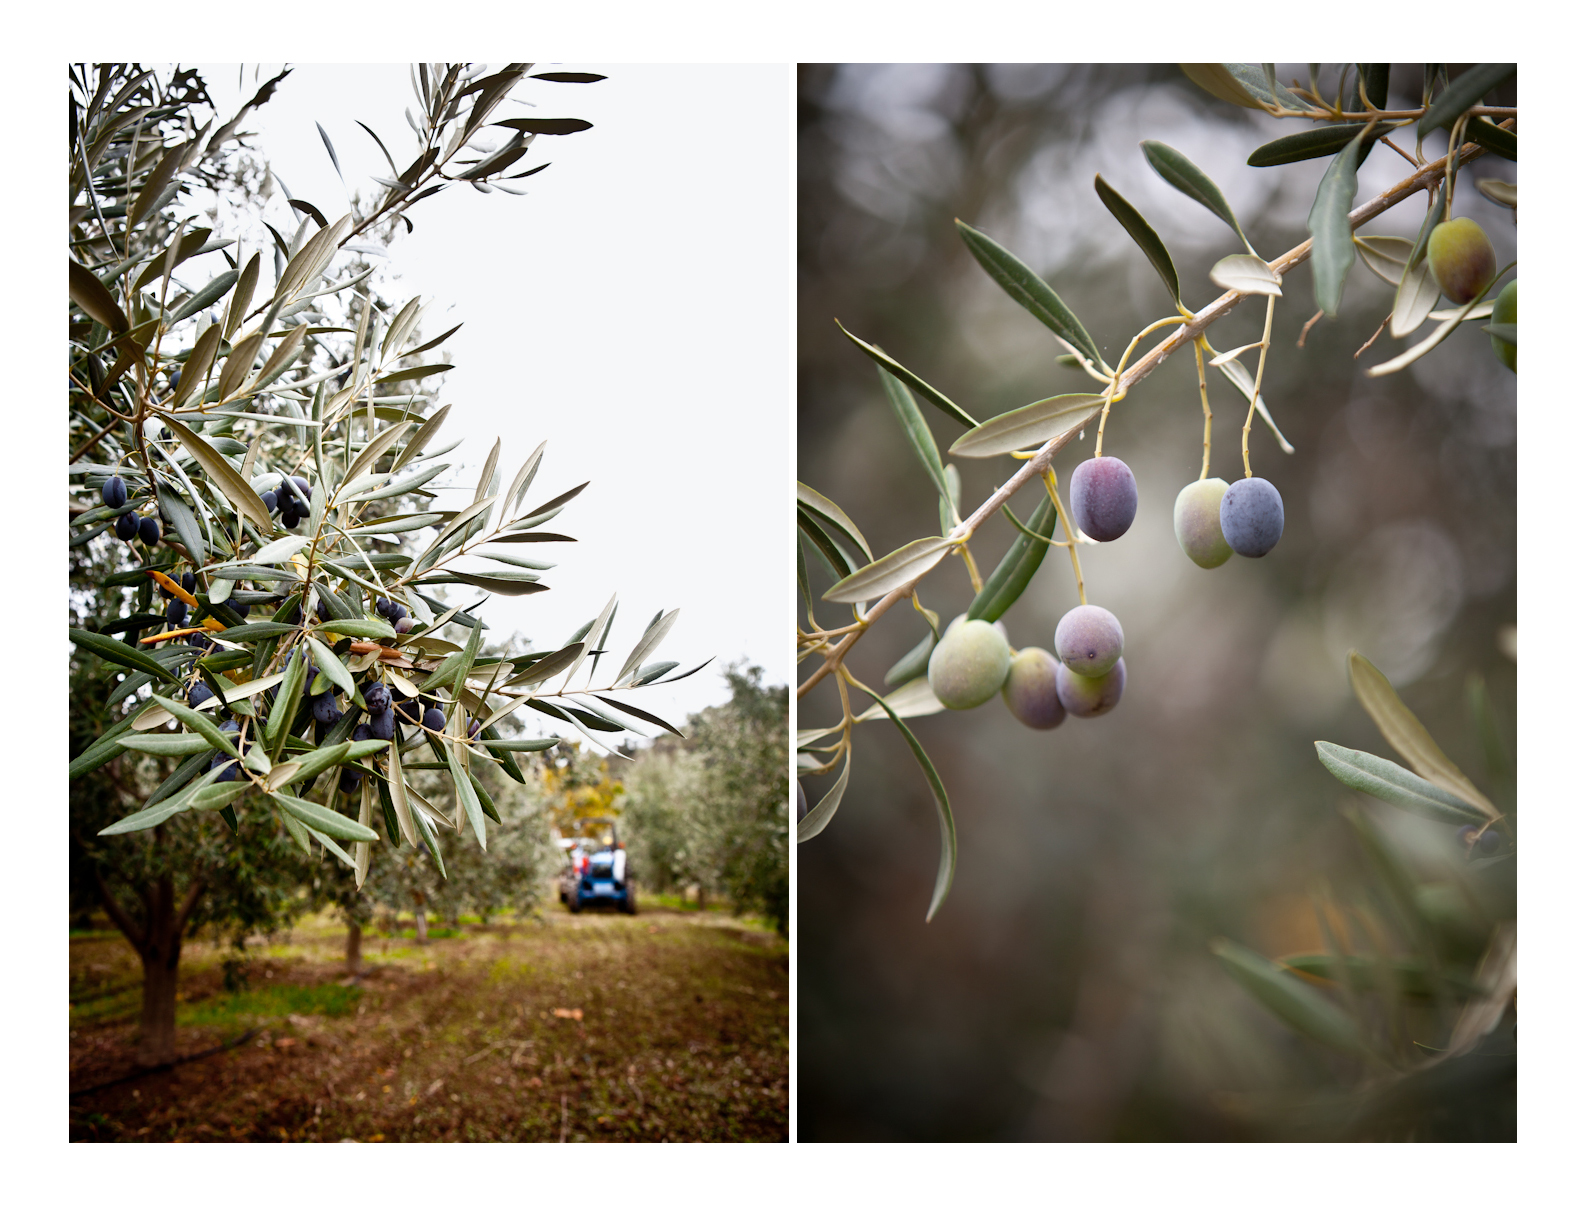 olive2.jpg